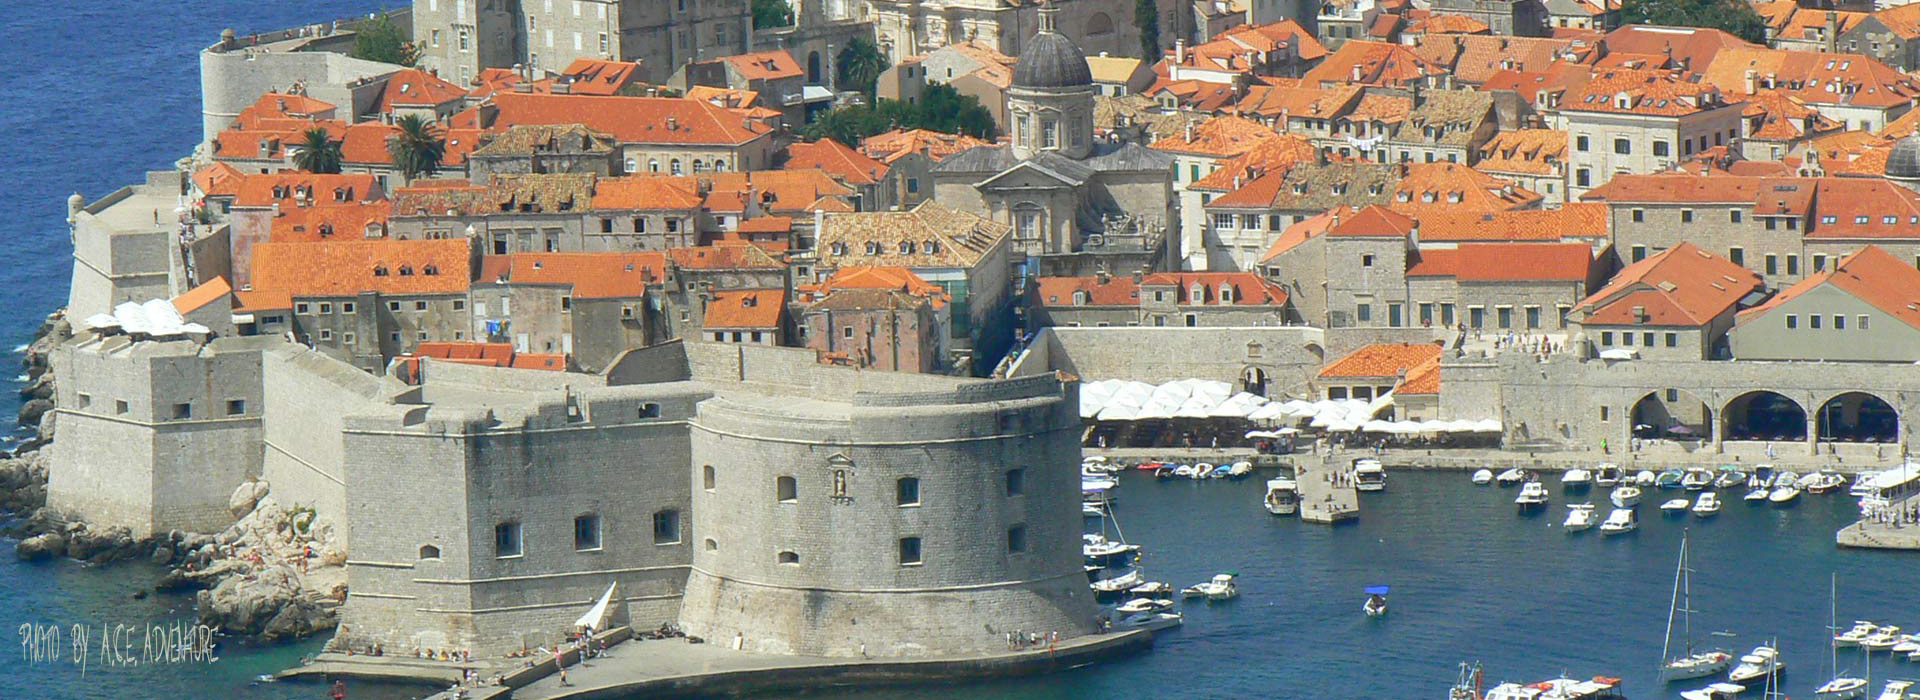 Montenegro walking guided holiday - Dubrovnik